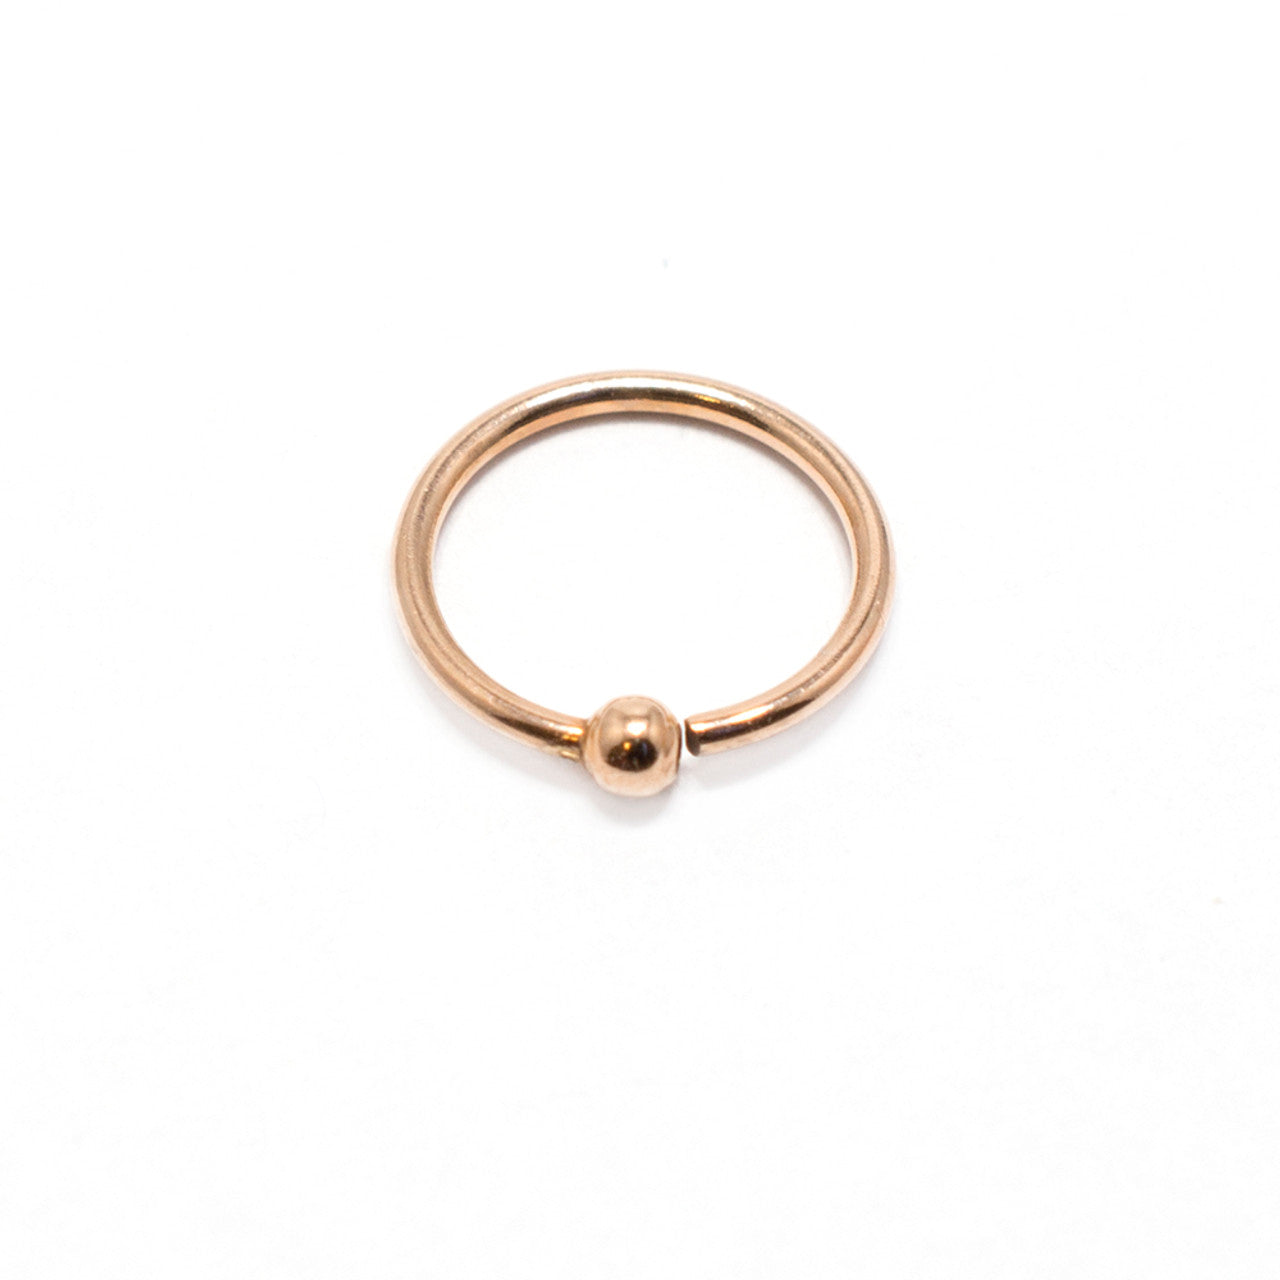 14 Karat Solid Rose Gold Nose Ring 20 Gauge Bendable Hoop & Fixed Ball